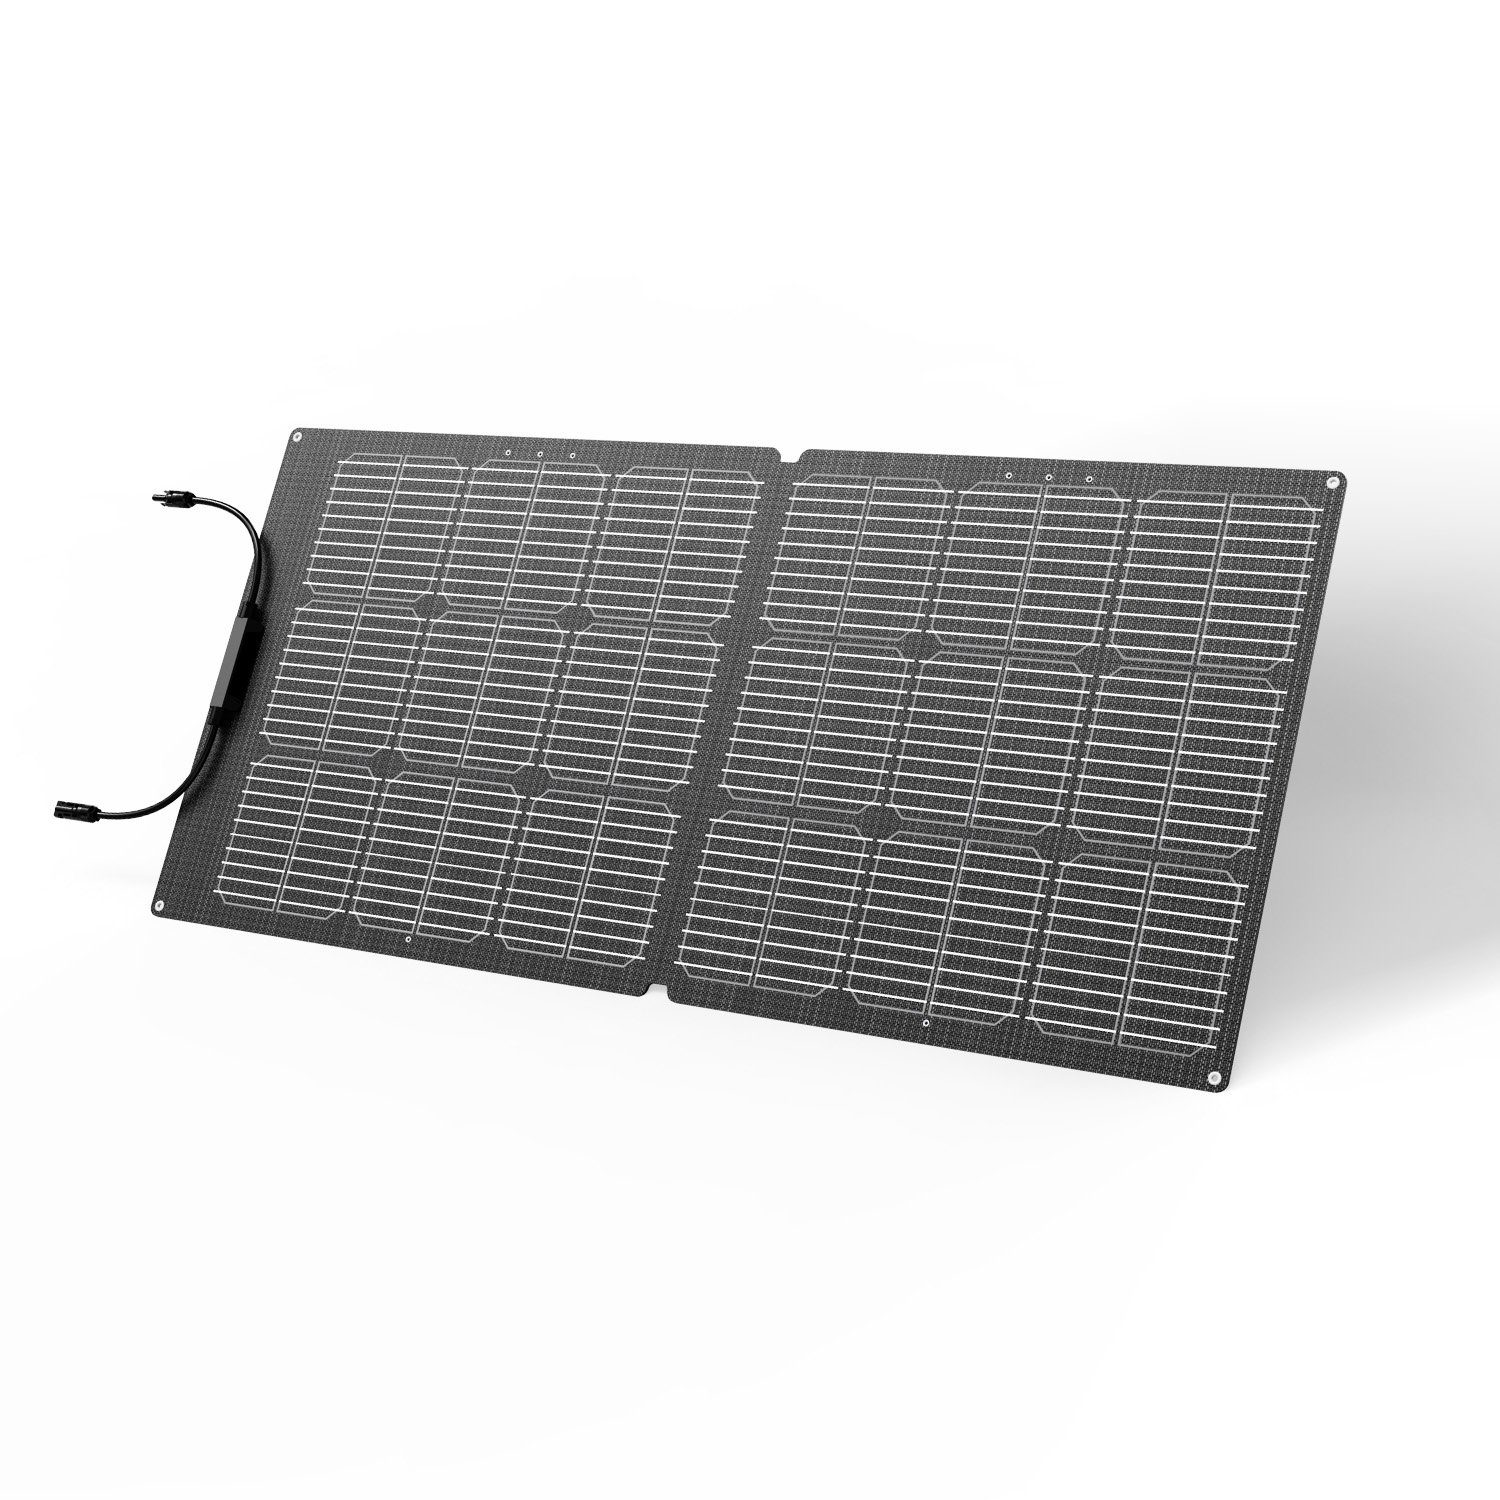 CITYSPORTS Solaranlage FULLSENT, Flexible Solarmodul 100/200W faltbar Balkonkraftwerk für PowerStation